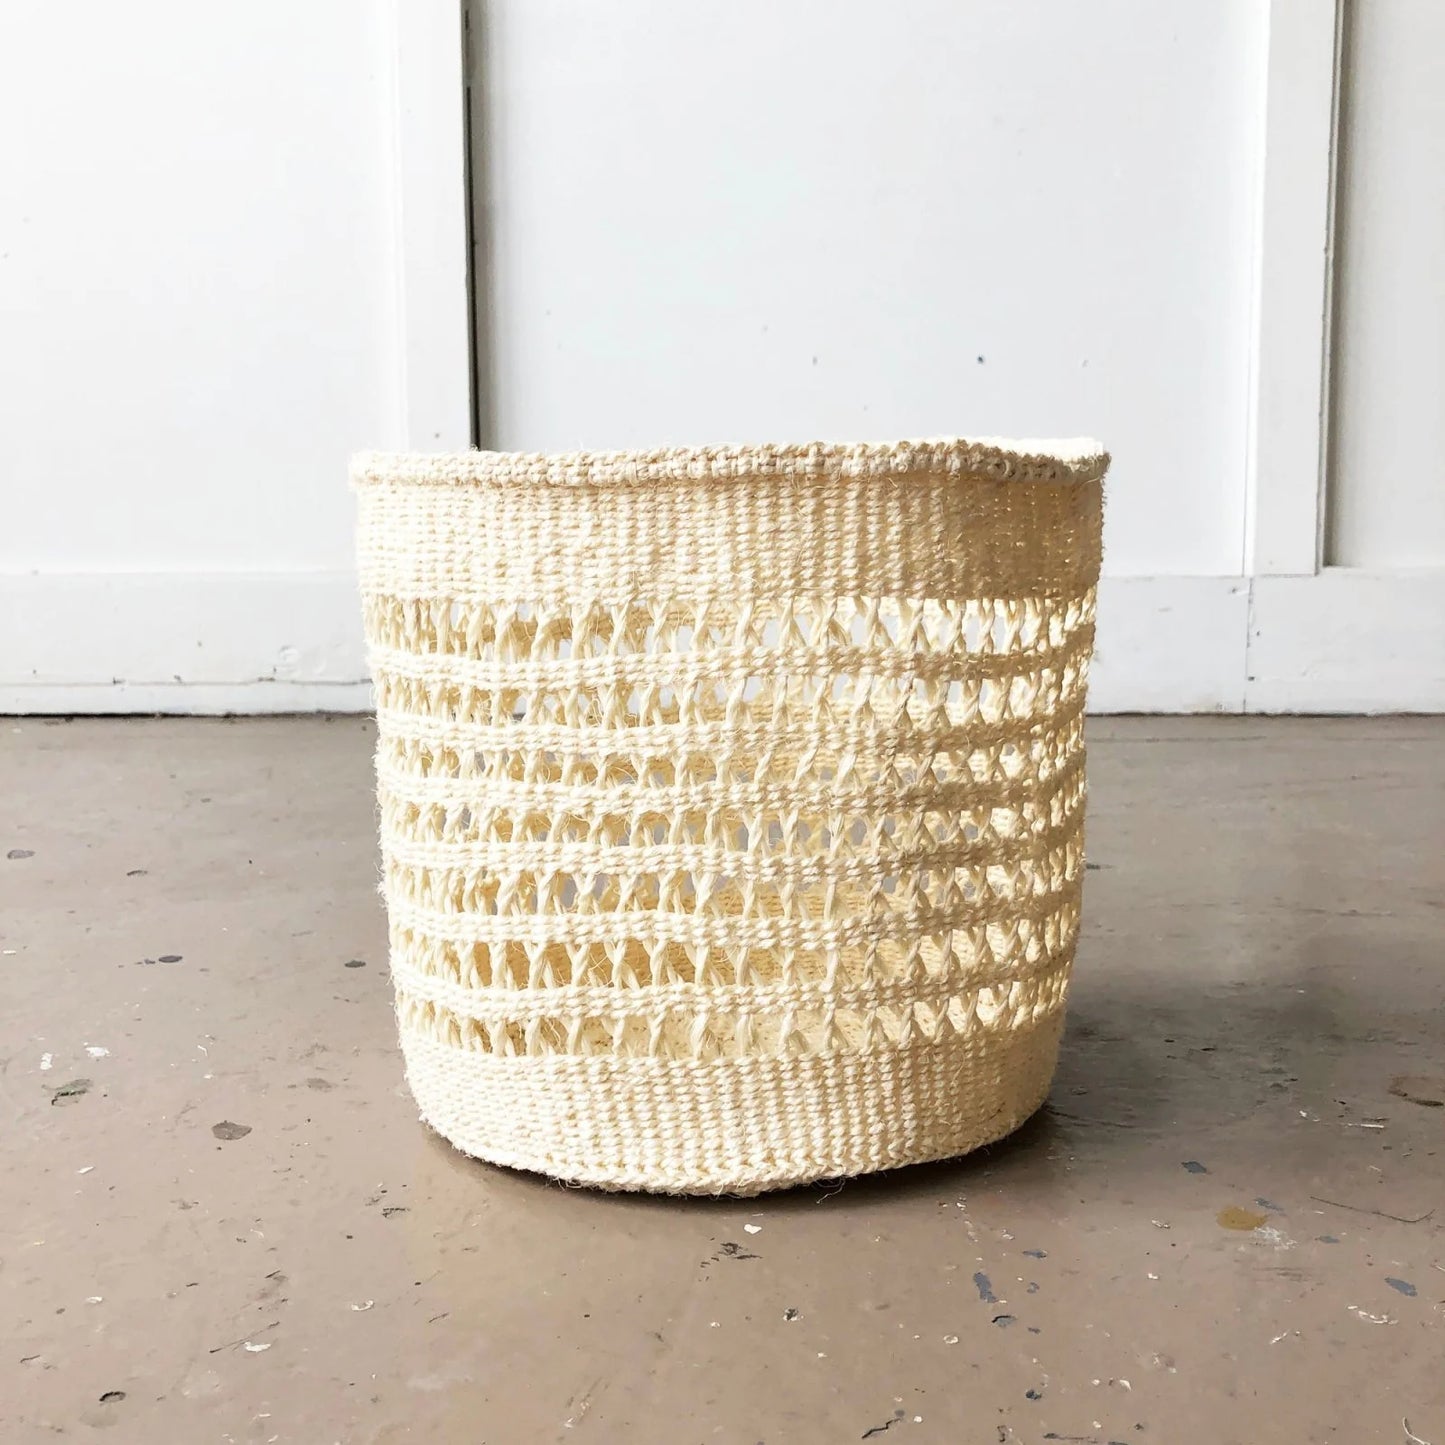 Storage Plant Basket: Netted - Medium (10"x10")